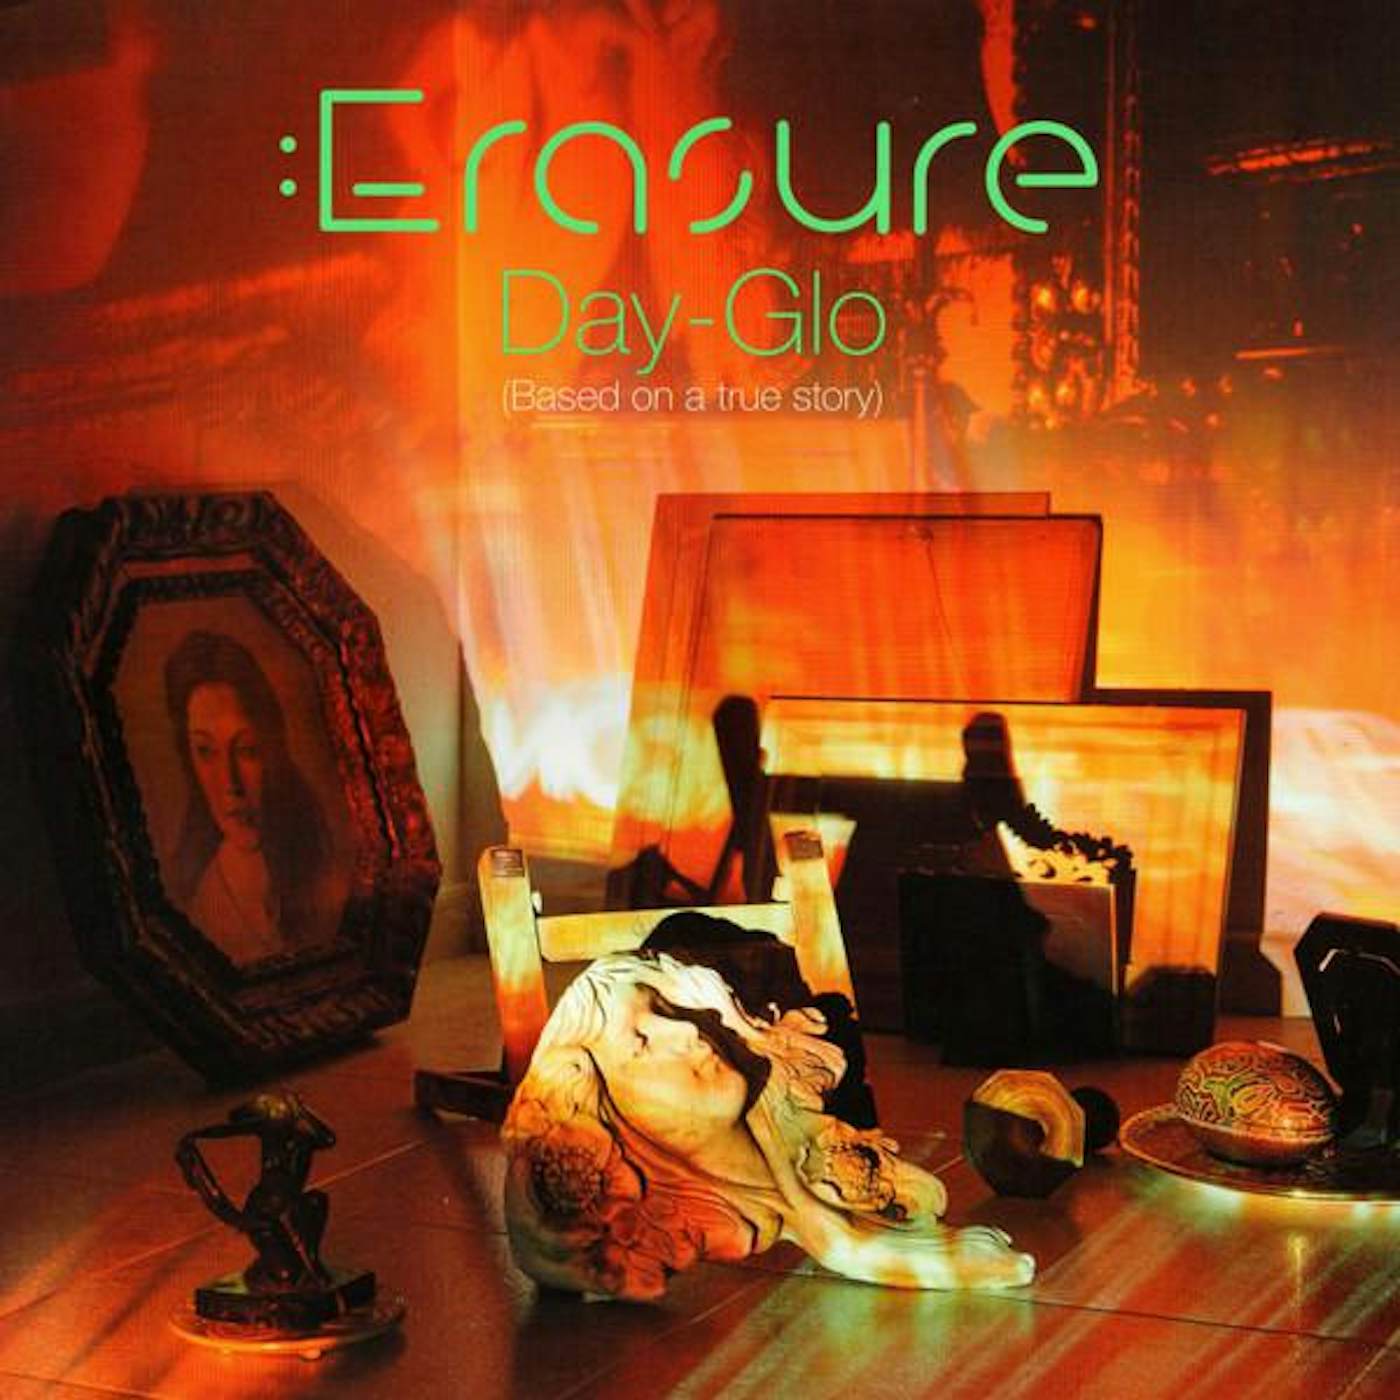 Erasure DAY-GLO (BASED ON A TRUE STORY) (LIMITED EDITION FLURO GREEN VINYL) Vinyl Record